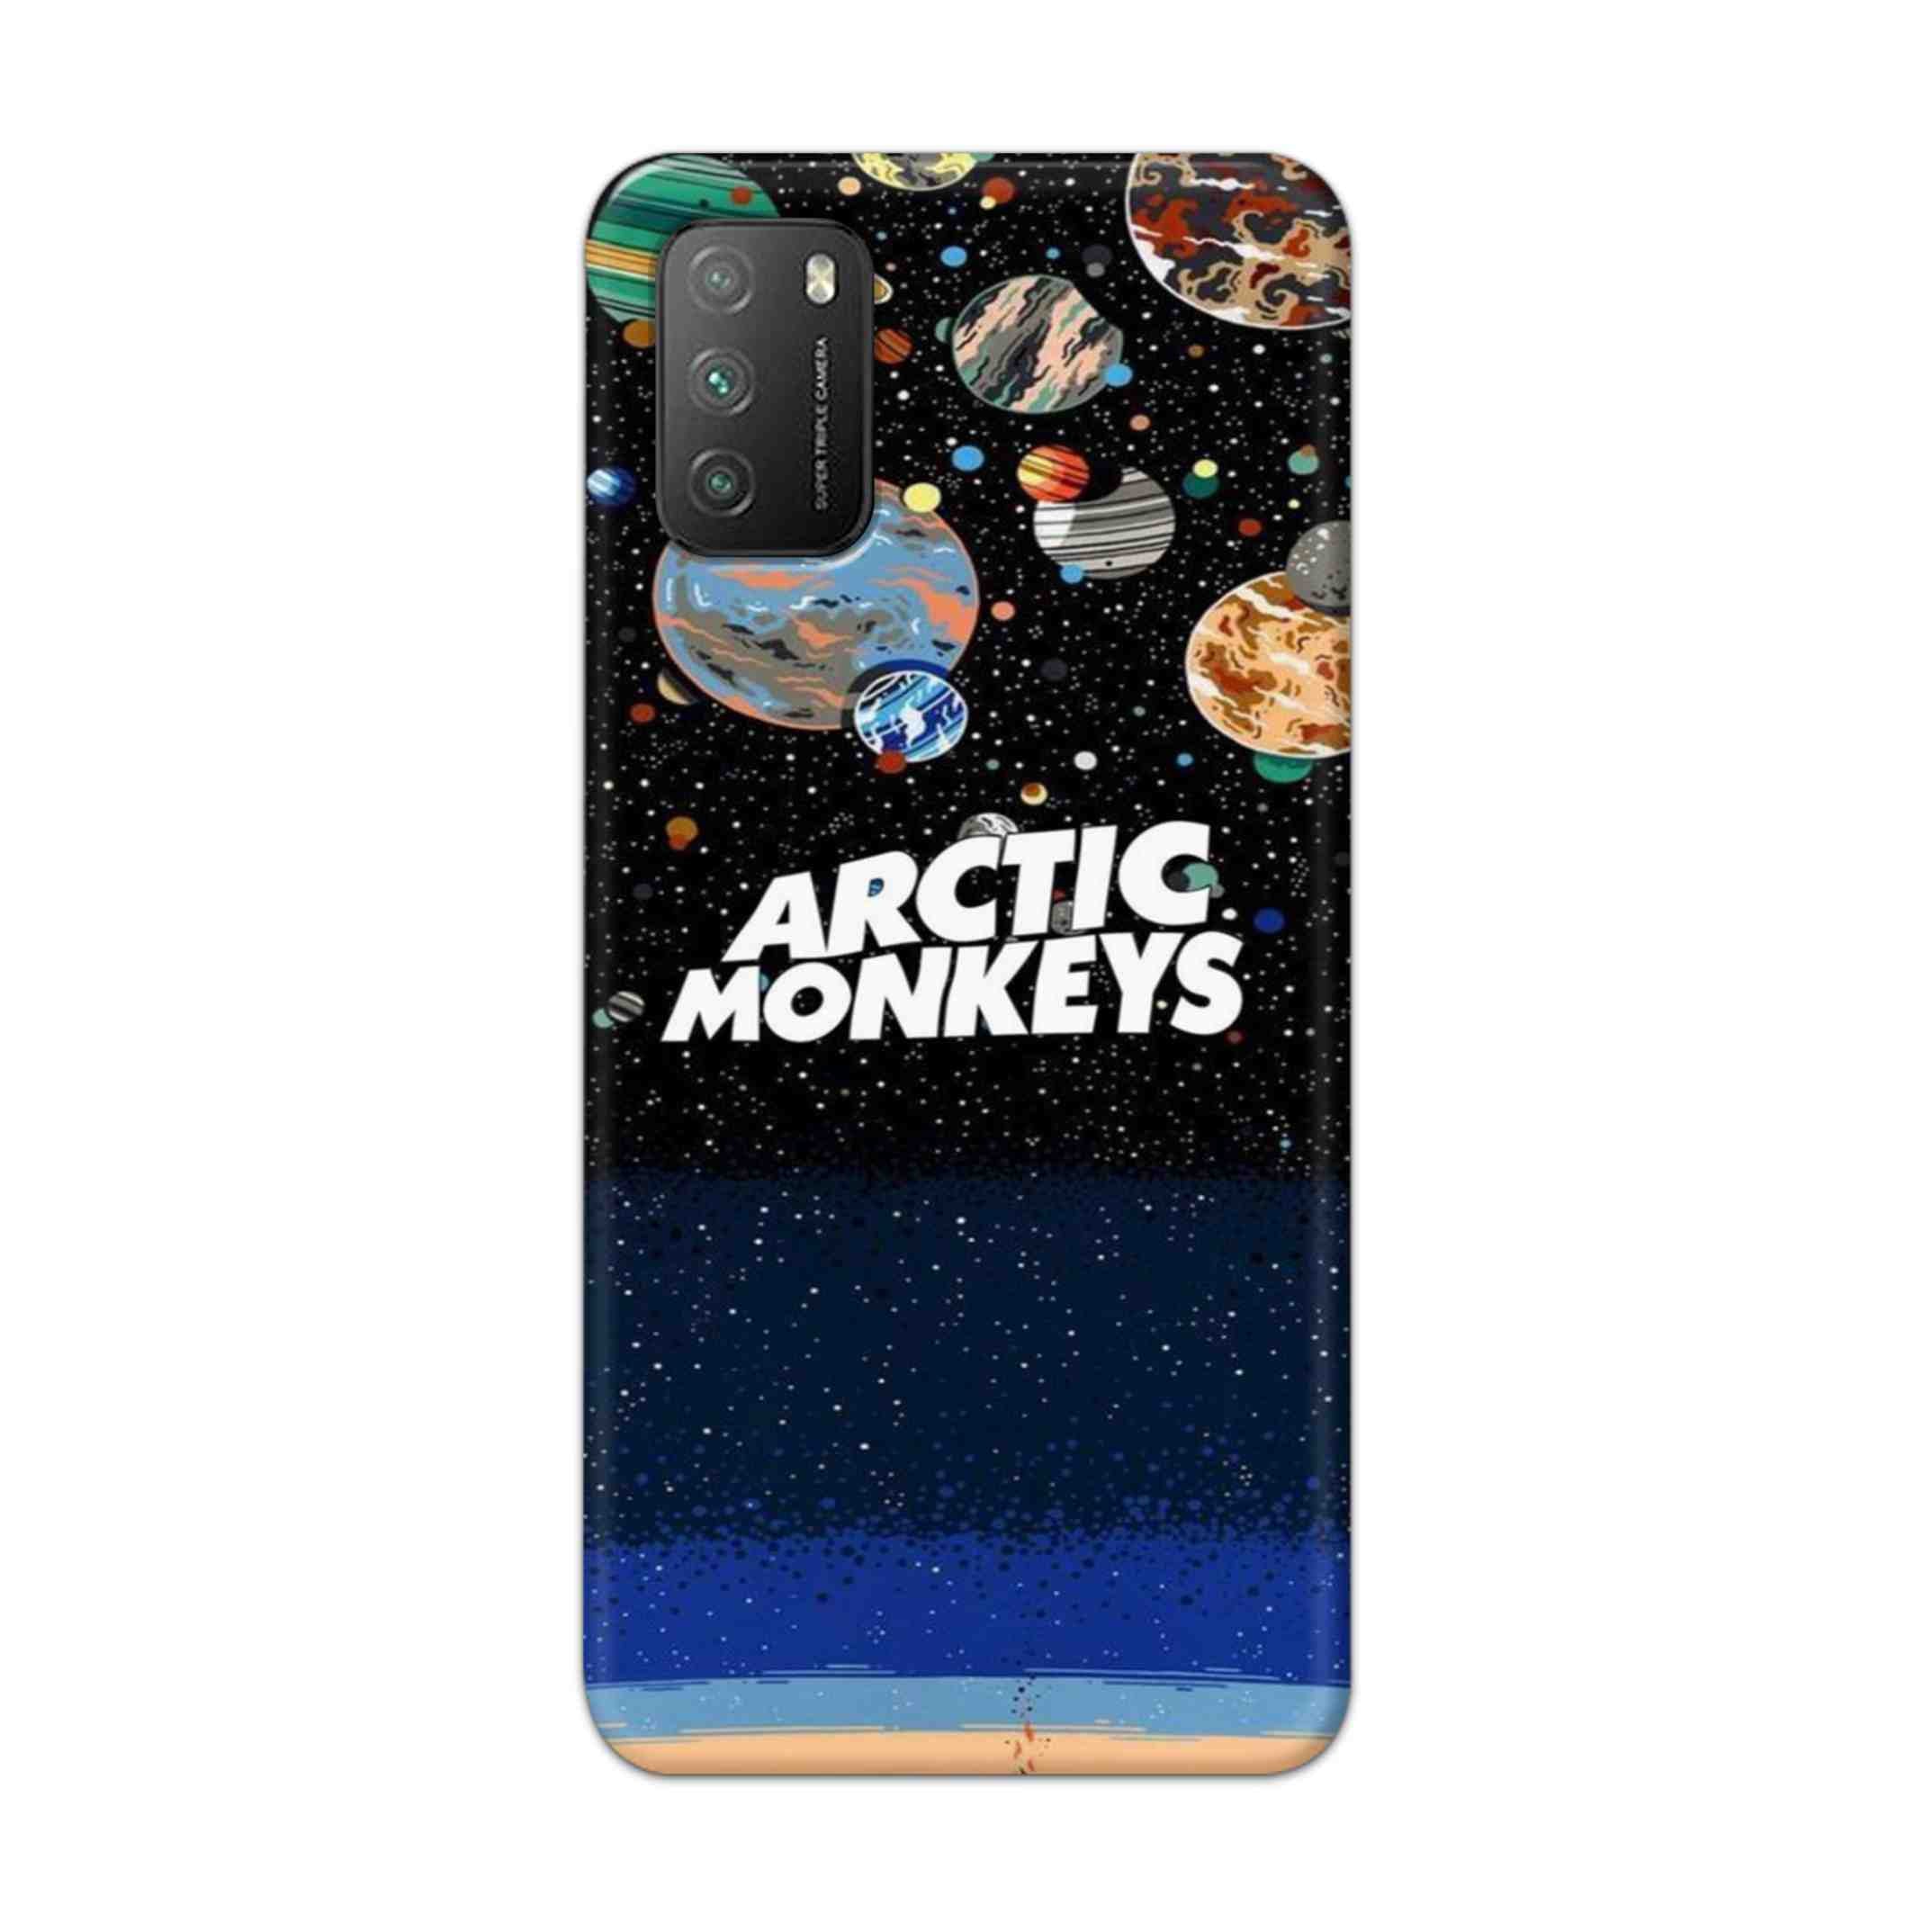 Buy Artic Monkeys Hard Back Mobile Phone Case Cover For Poco M3 Online